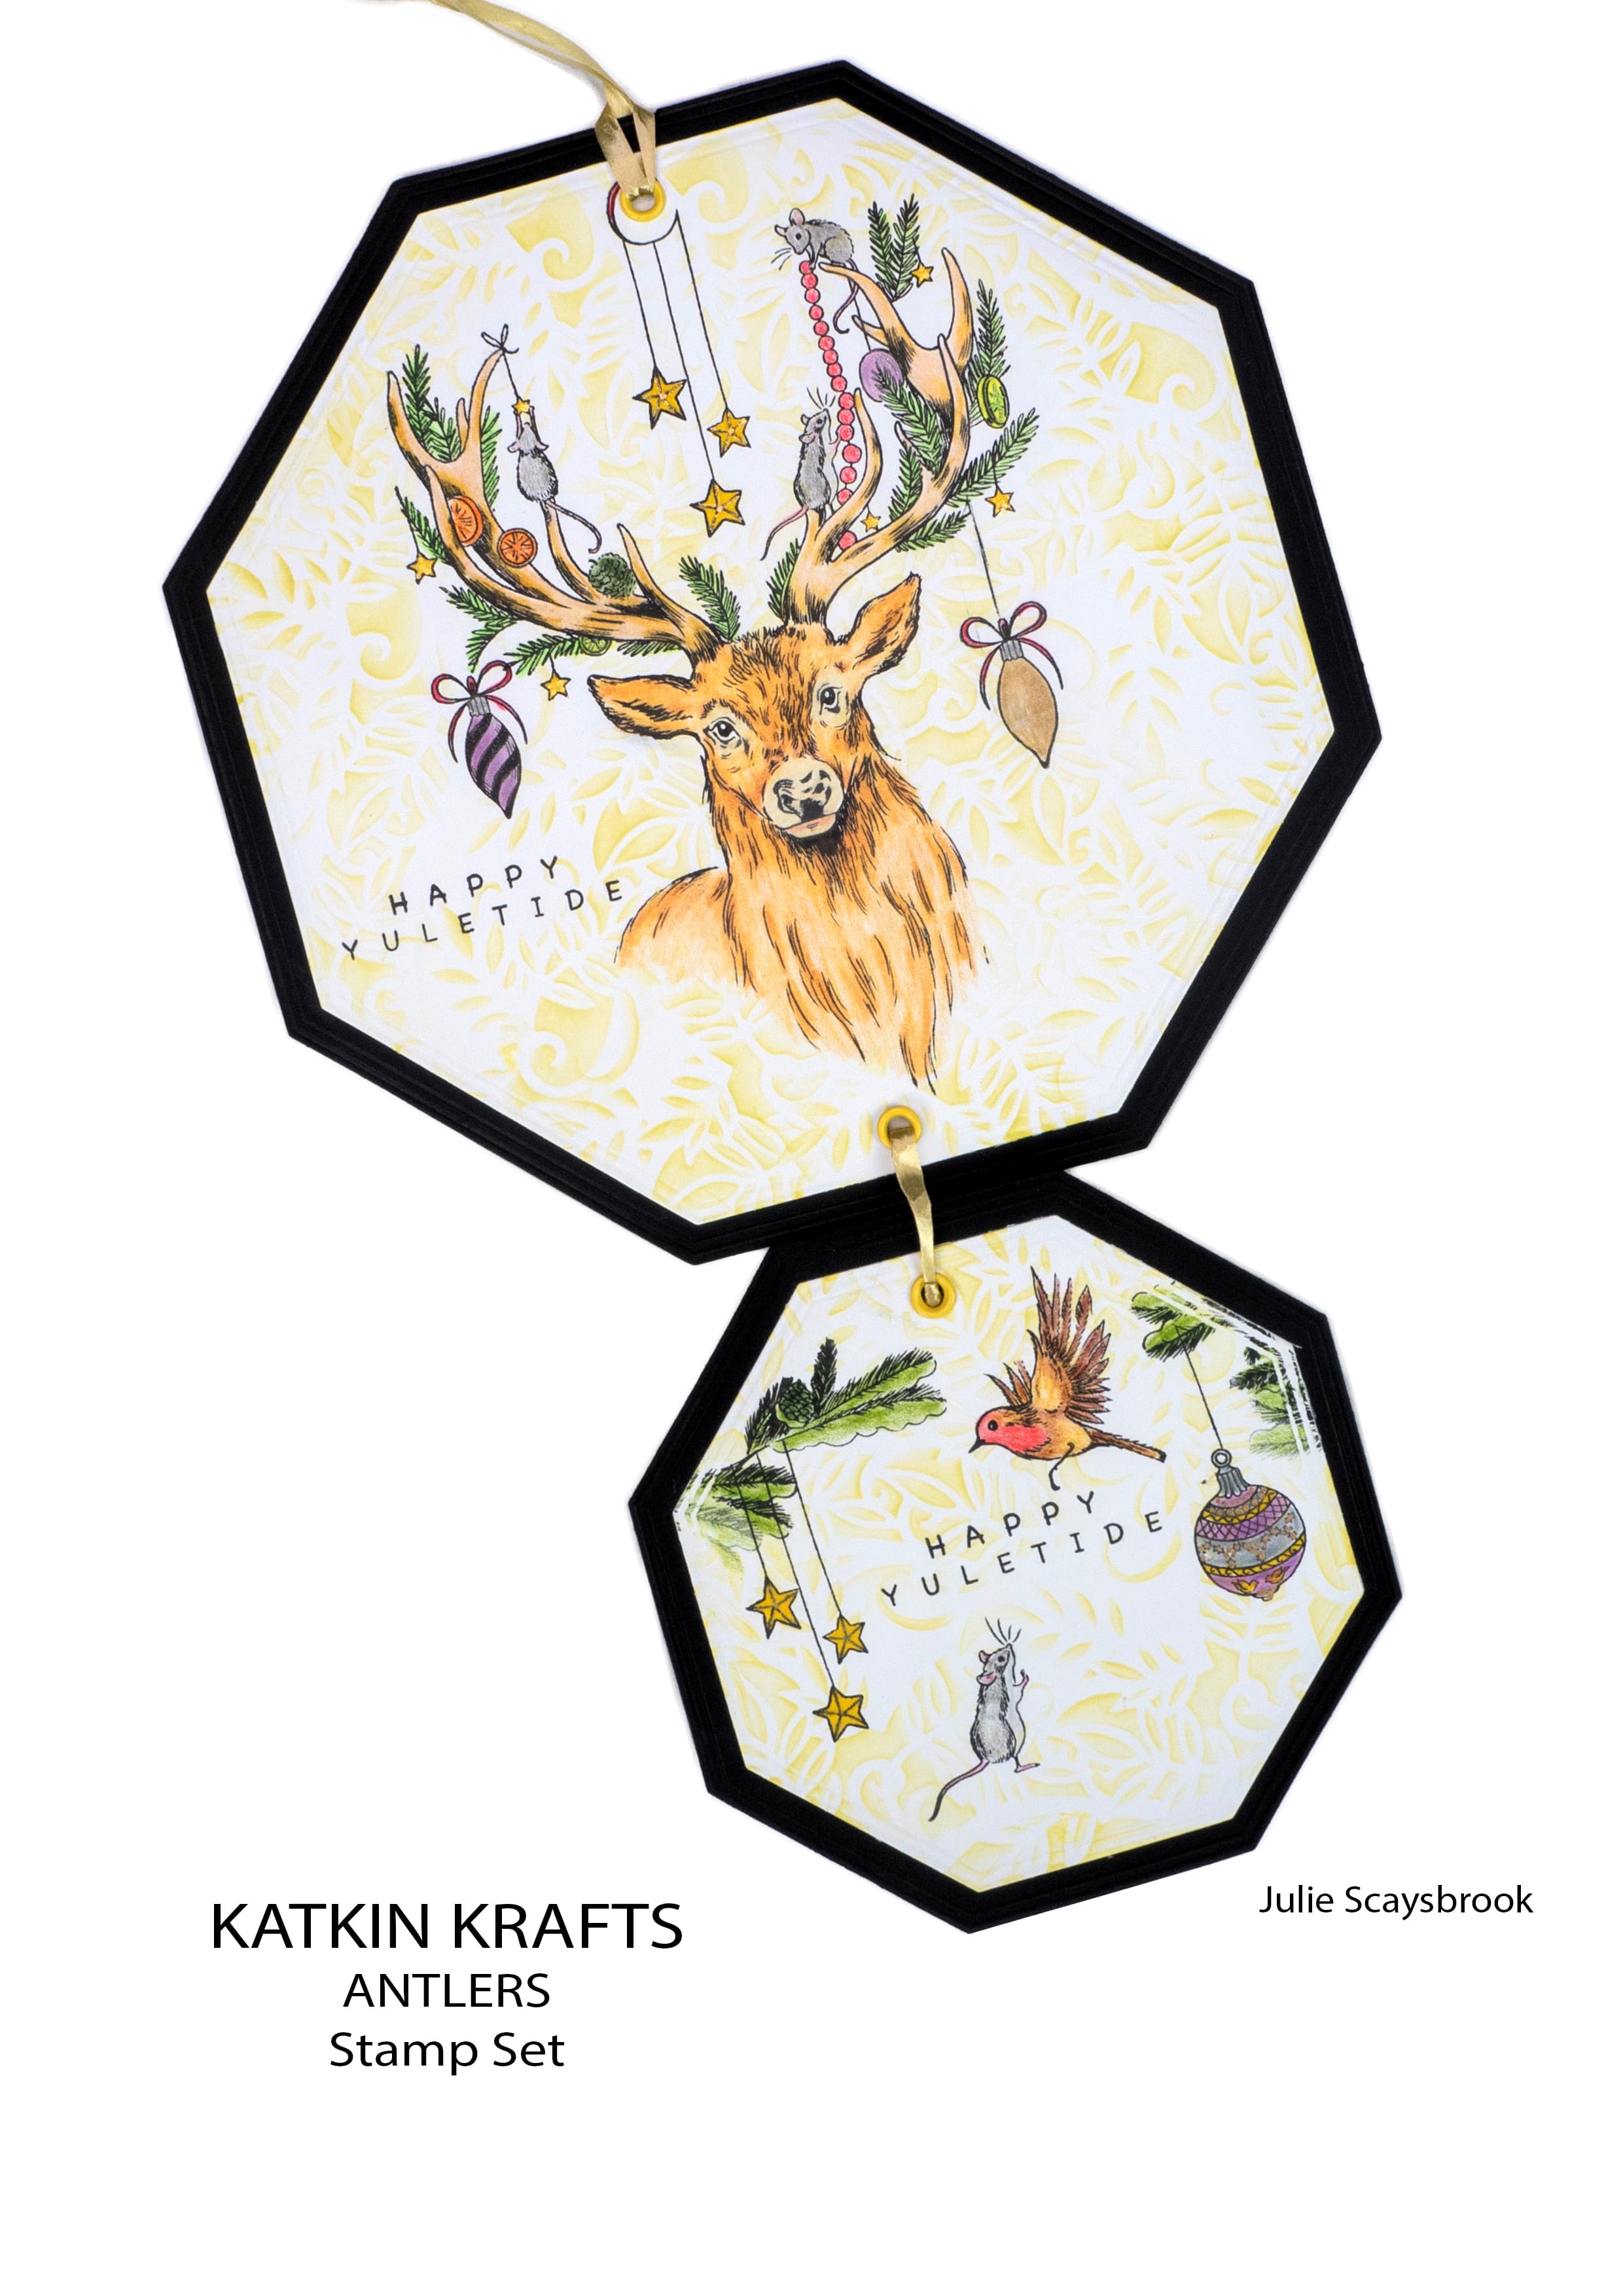 Katkin Krafts Antlers 6 in x 8 in Clear Stamp Set